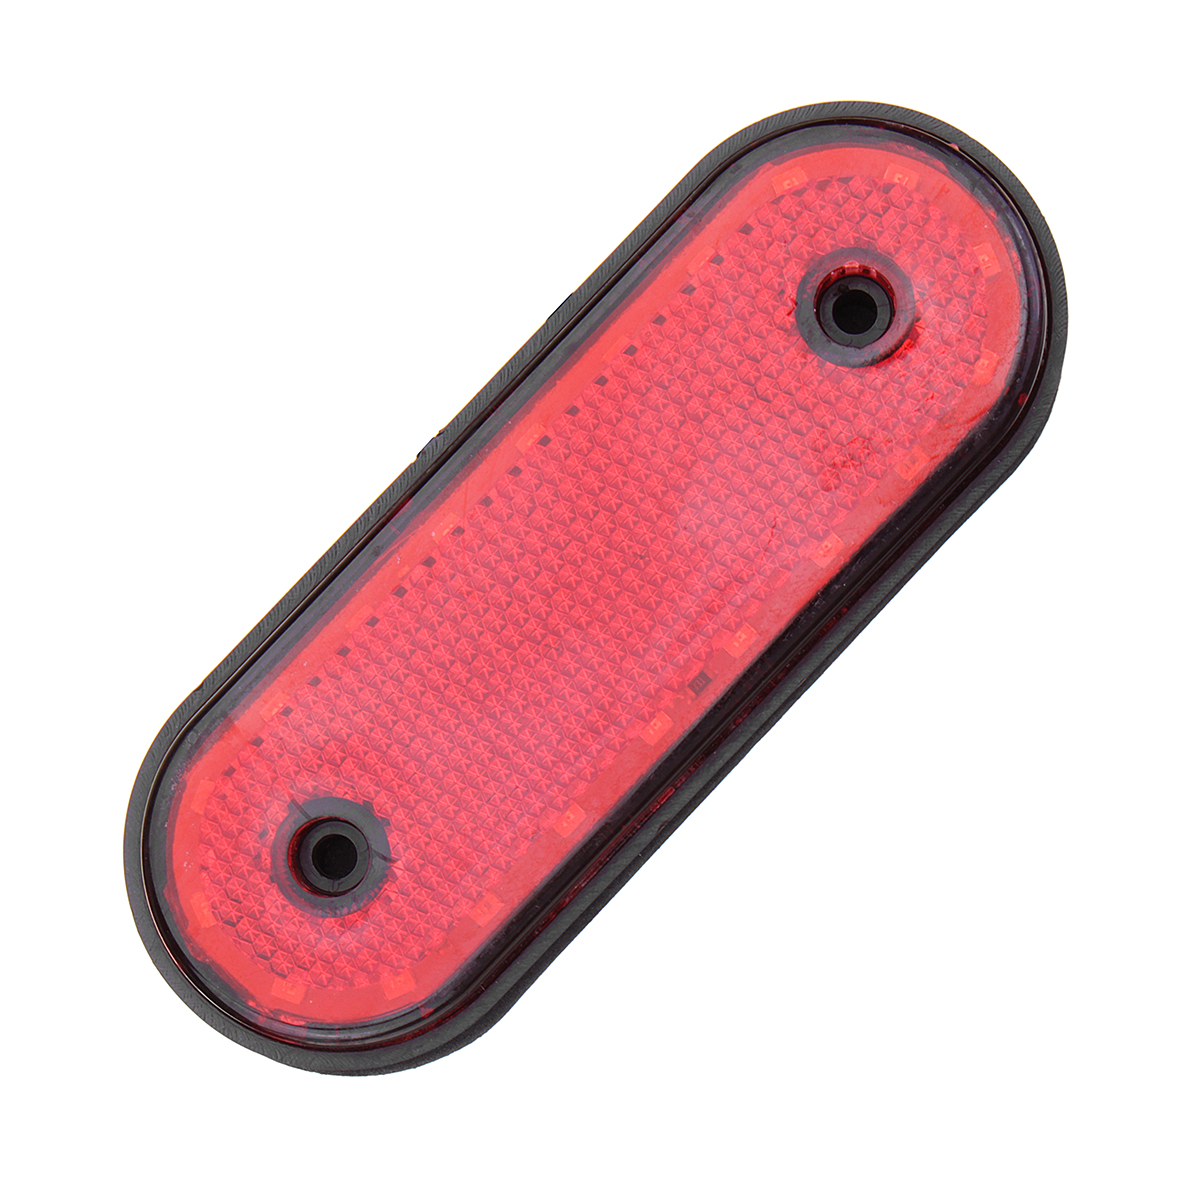 Single-Red-24v-20led-with-rubber-edge-12cm-Shock-absorbing-sponge-pad-Reflective-mask-Ip67-side-Corn-1631413-3